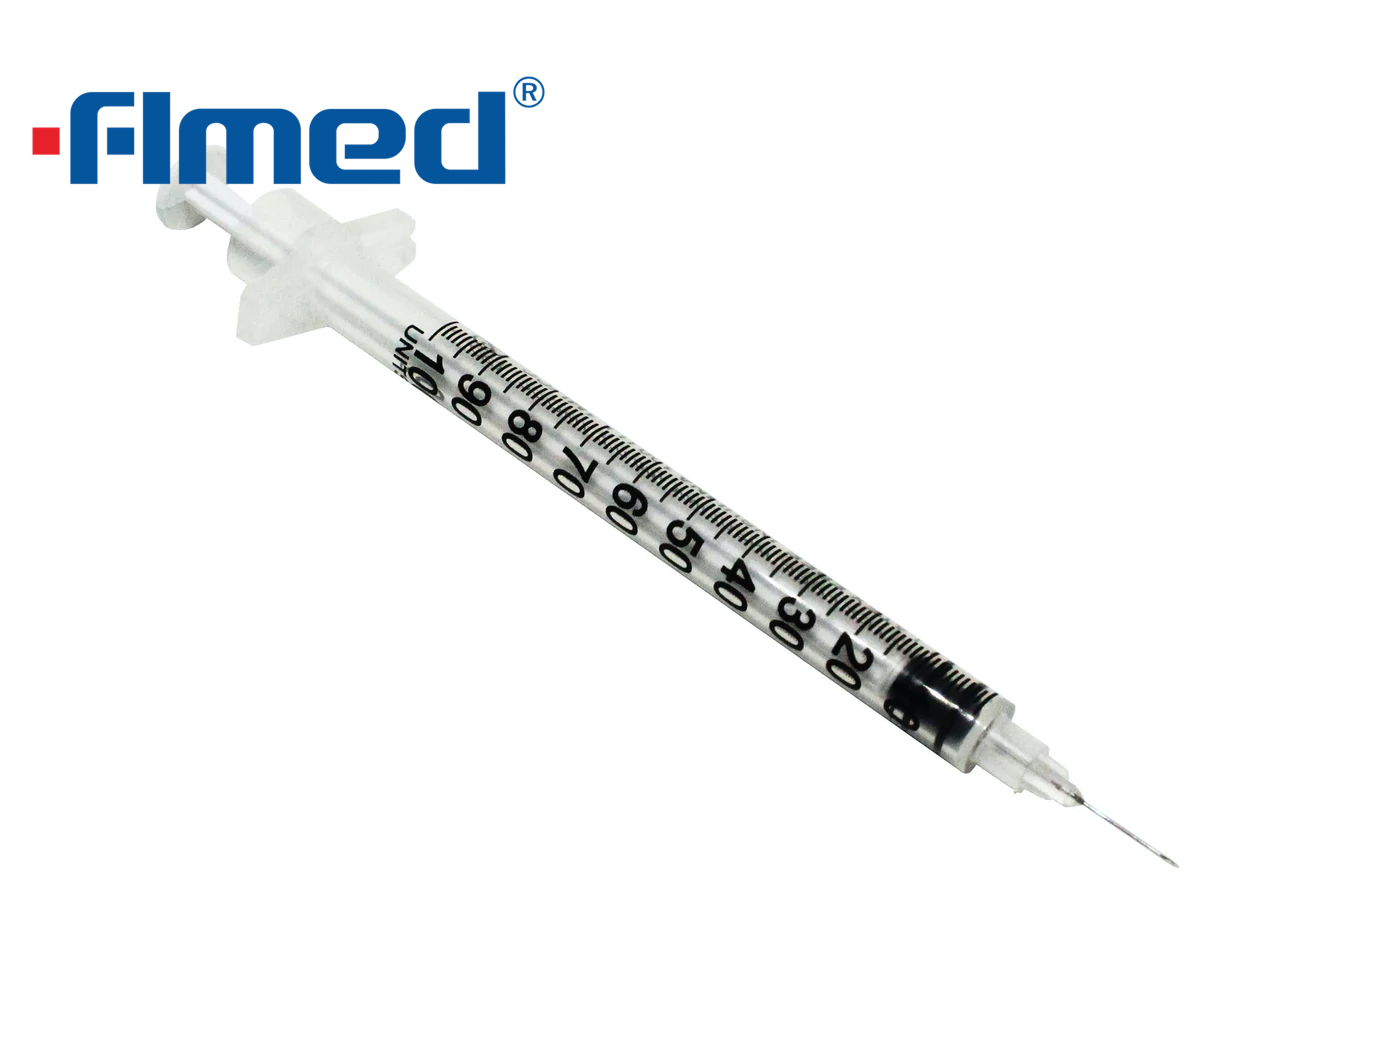 Disposable 1ml Insulin Syringe & Needle 8mm X 30g